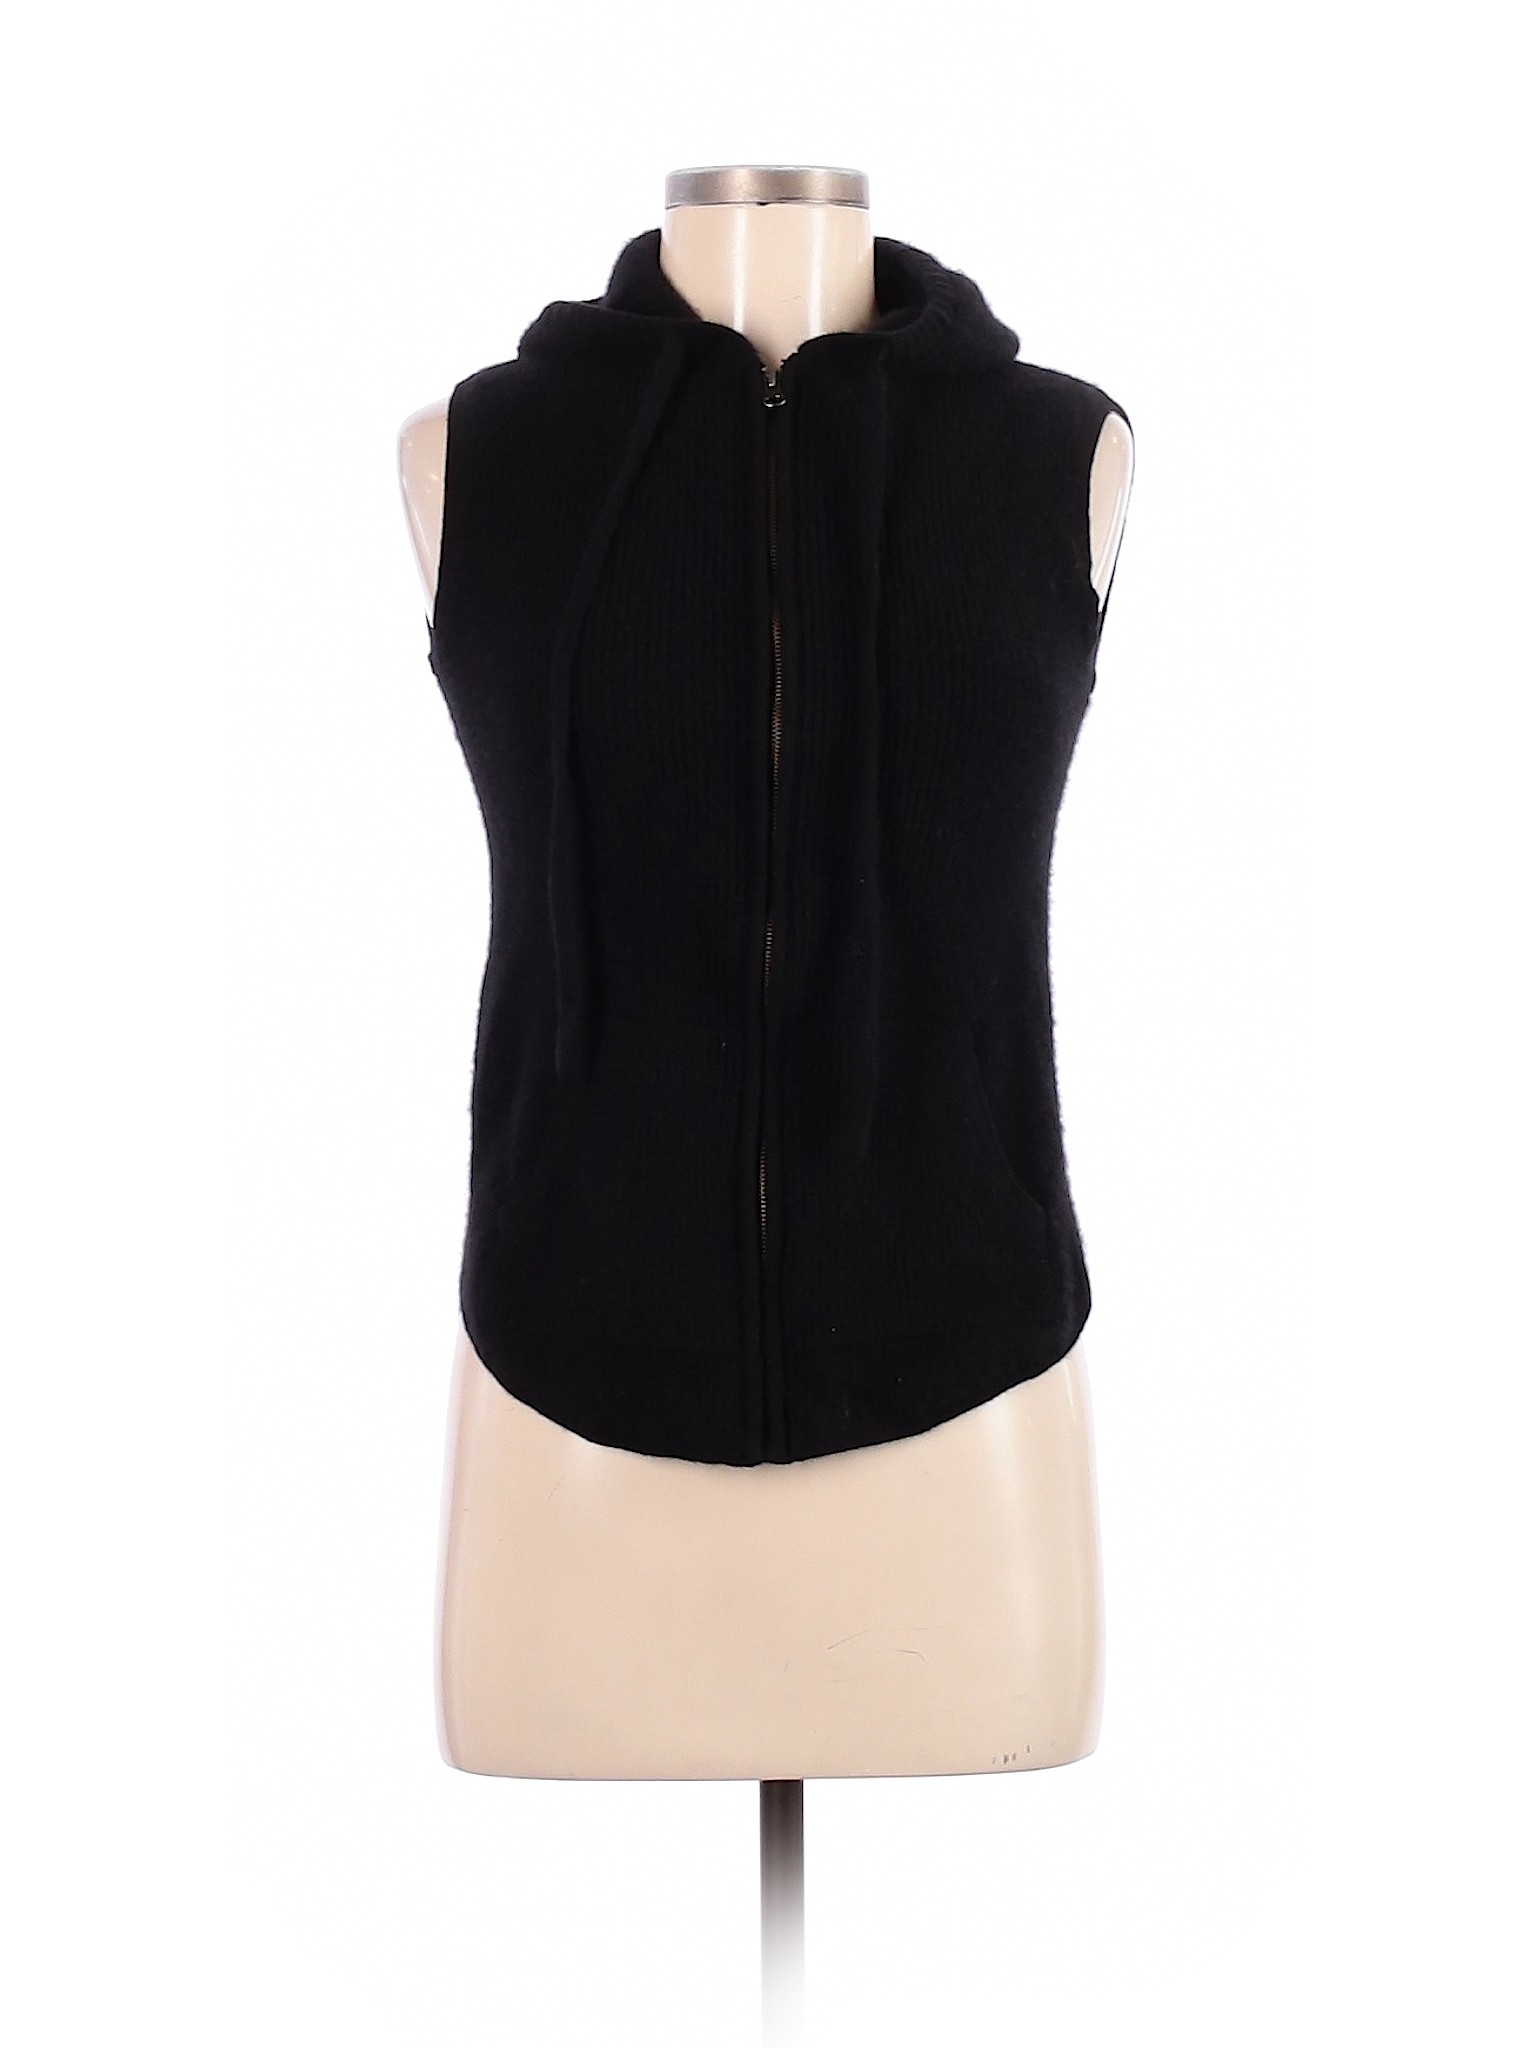 Assorted Brands Women Black Sweater Vest XS | eBay